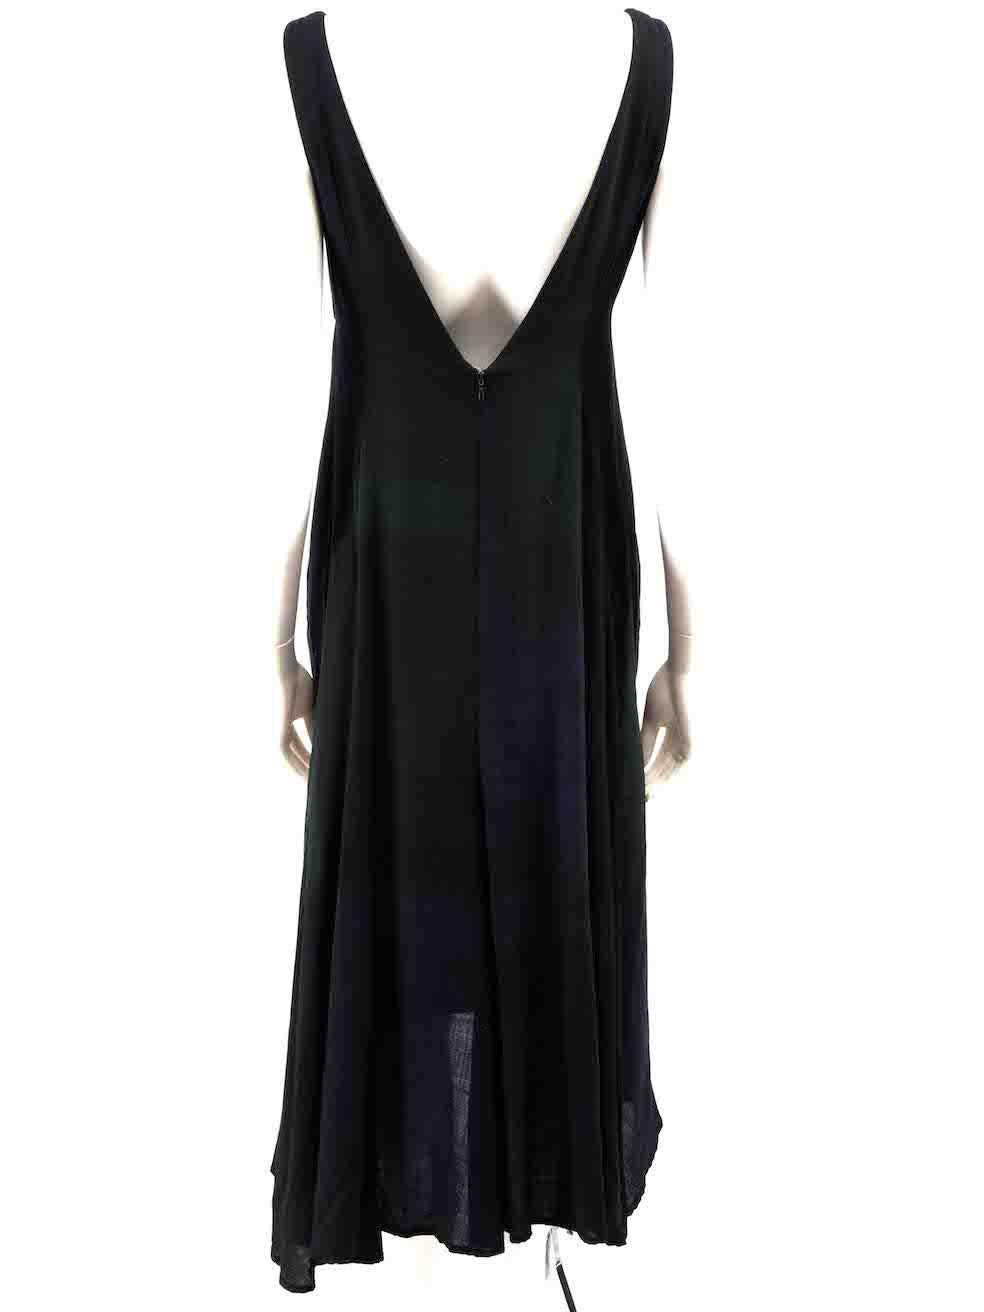 Yohji Yamamoto Wool Sleeveless Midi Dress Size XS In Good Condition For Sale In London, GB